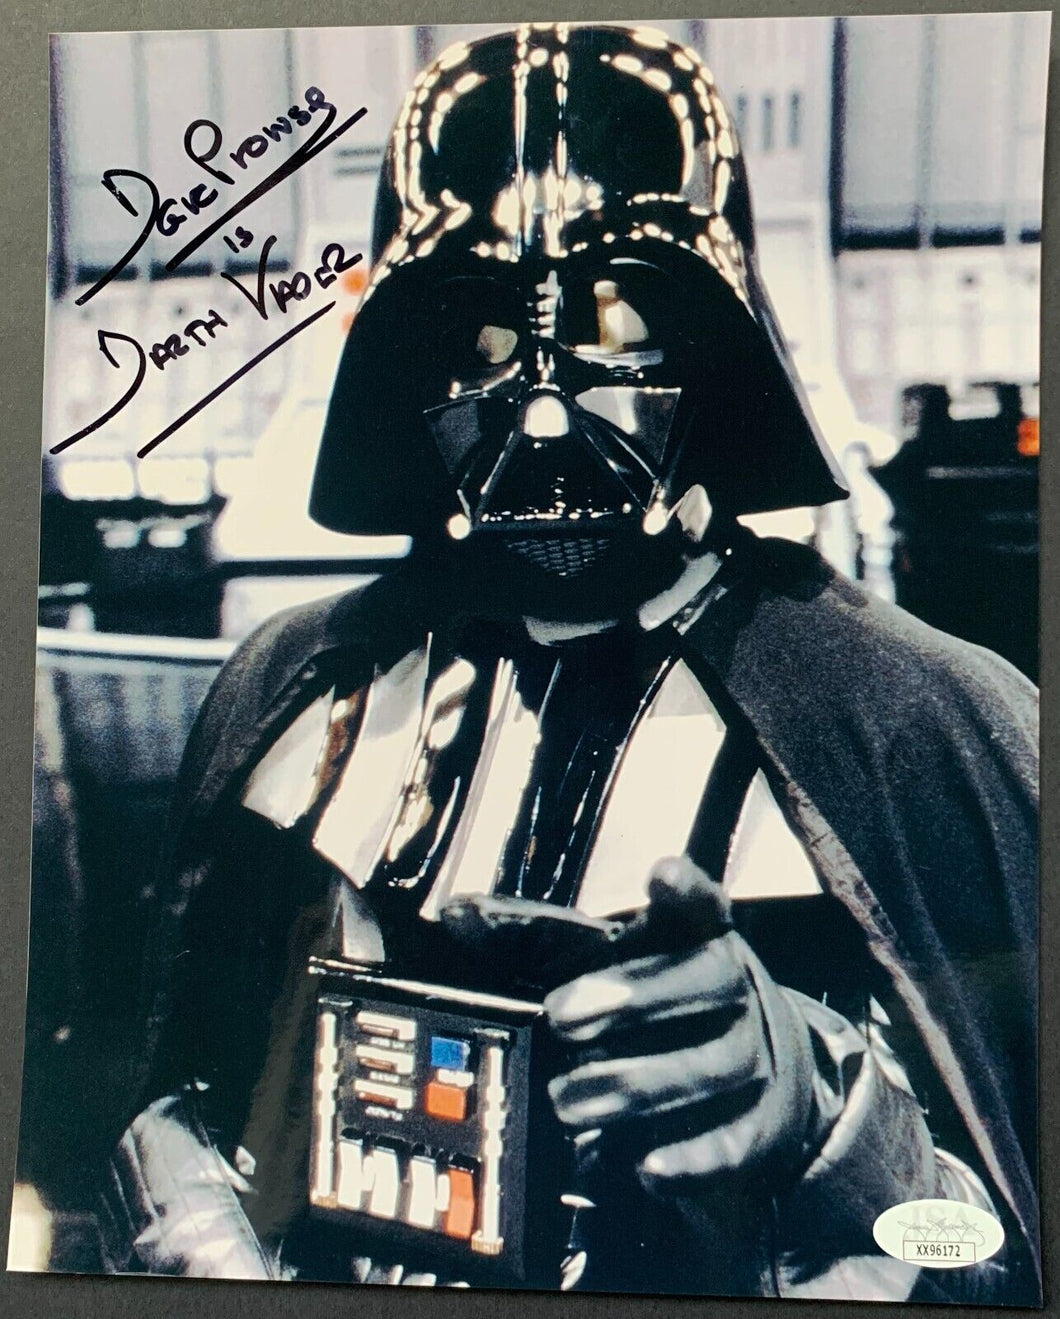 David Prowse as Darth Vader Autographed Color Photo JSA LOA Star Wars Movies VTG